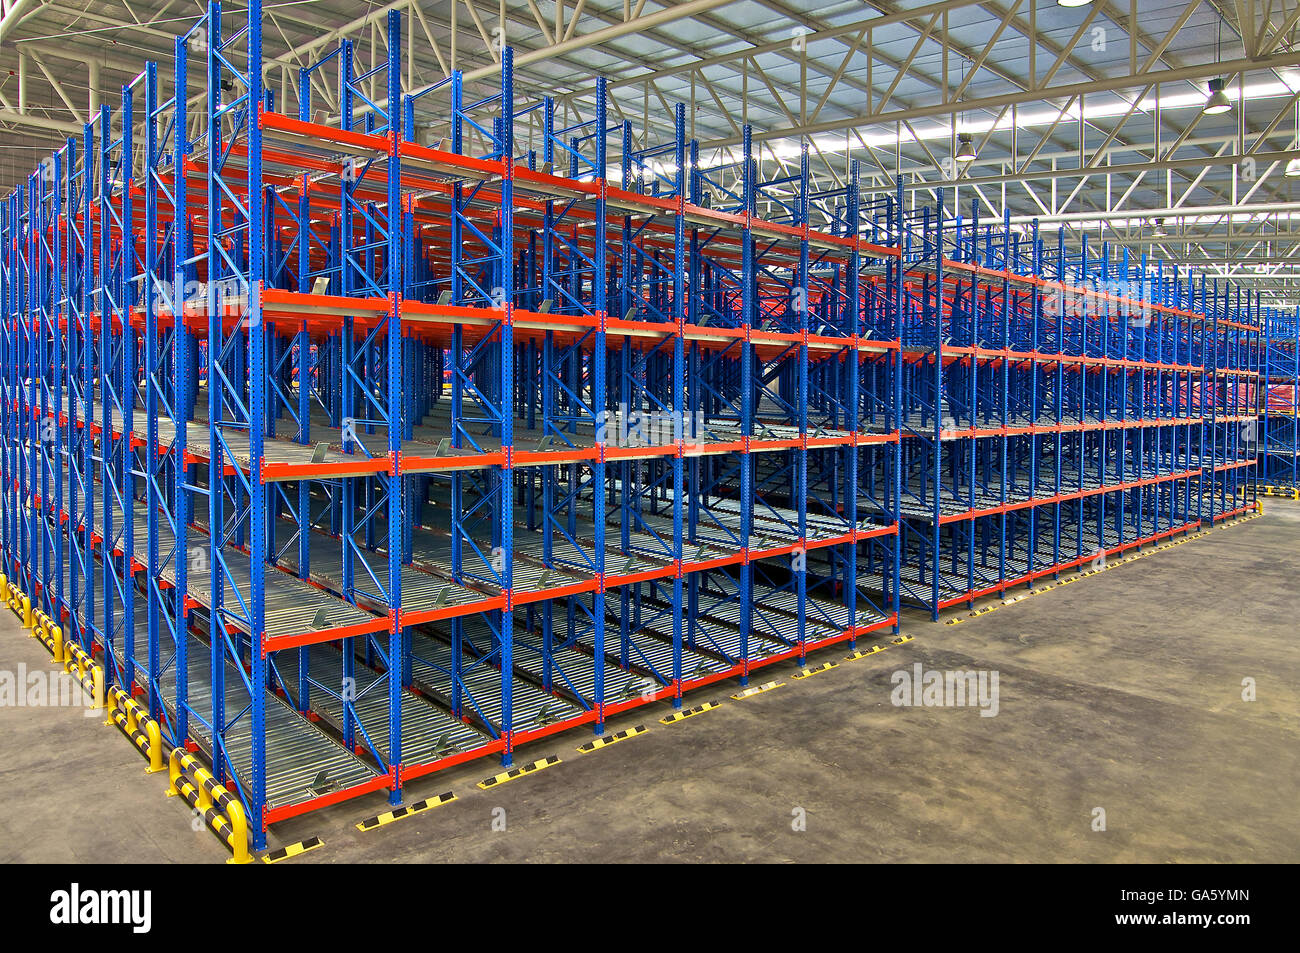 Warehouse storage, shelving, metal, pallet racking systems Stock Photo